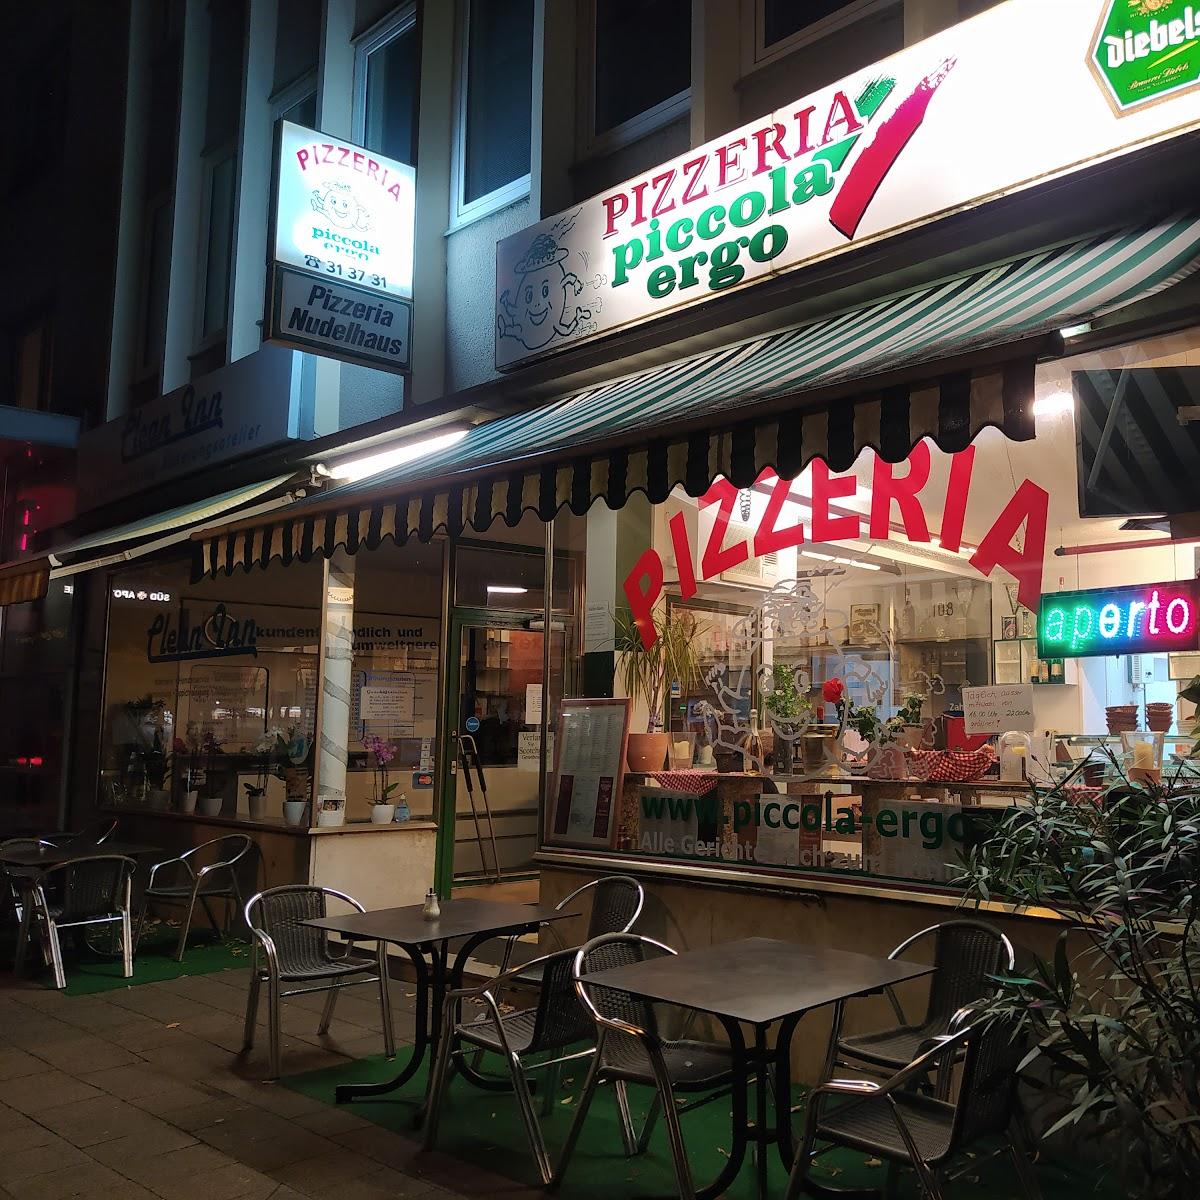 Restaurant "Pizzeria Piccola Ergo" in Düsseldorf